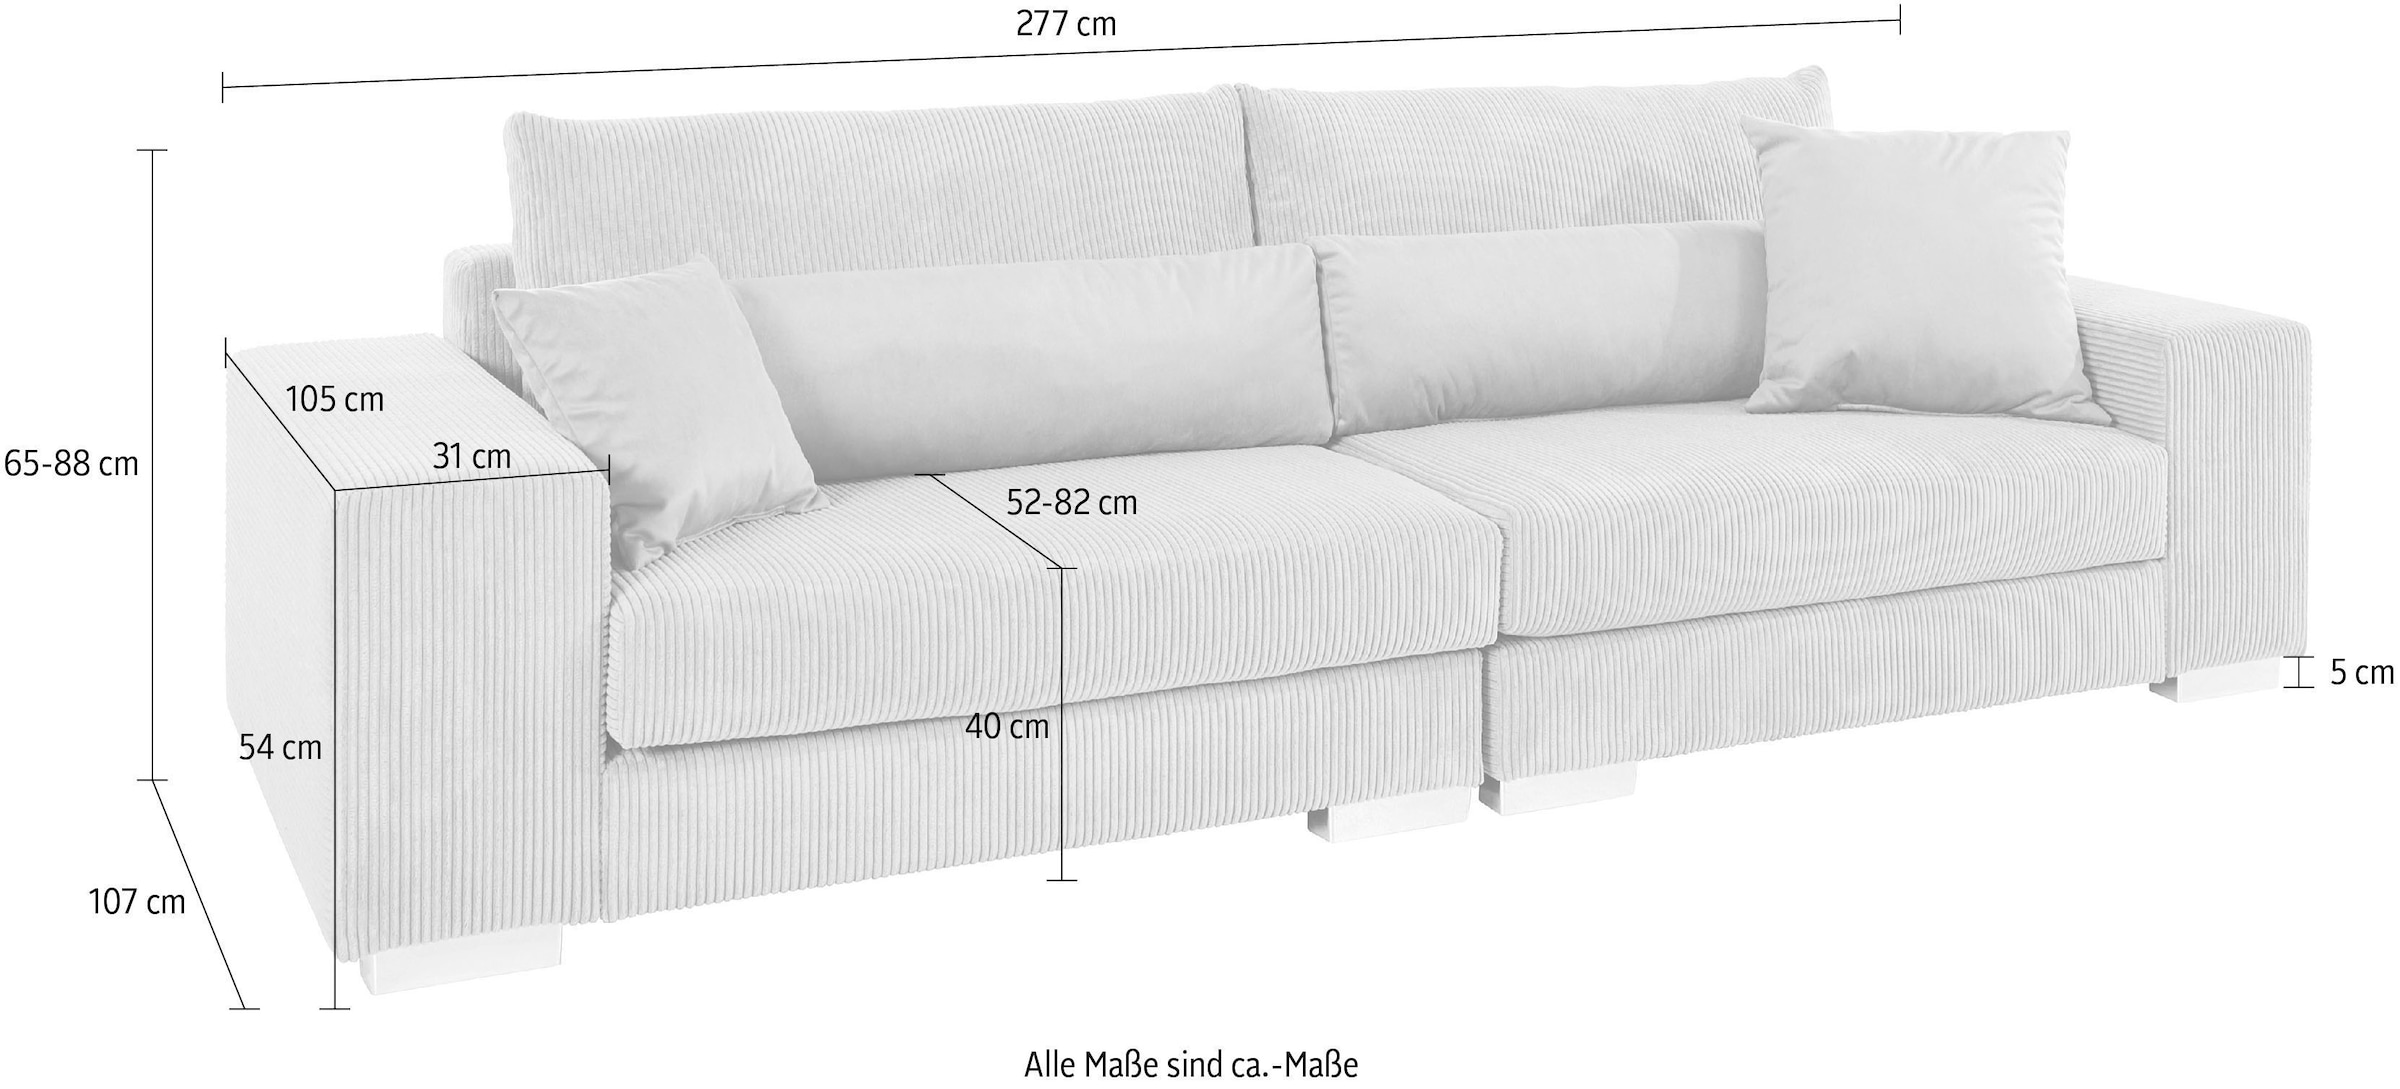 Home affaire Big-Sofa »Vasco«, Breite 277 cm, inkl. 6-teiliges Kissenset, in Cord